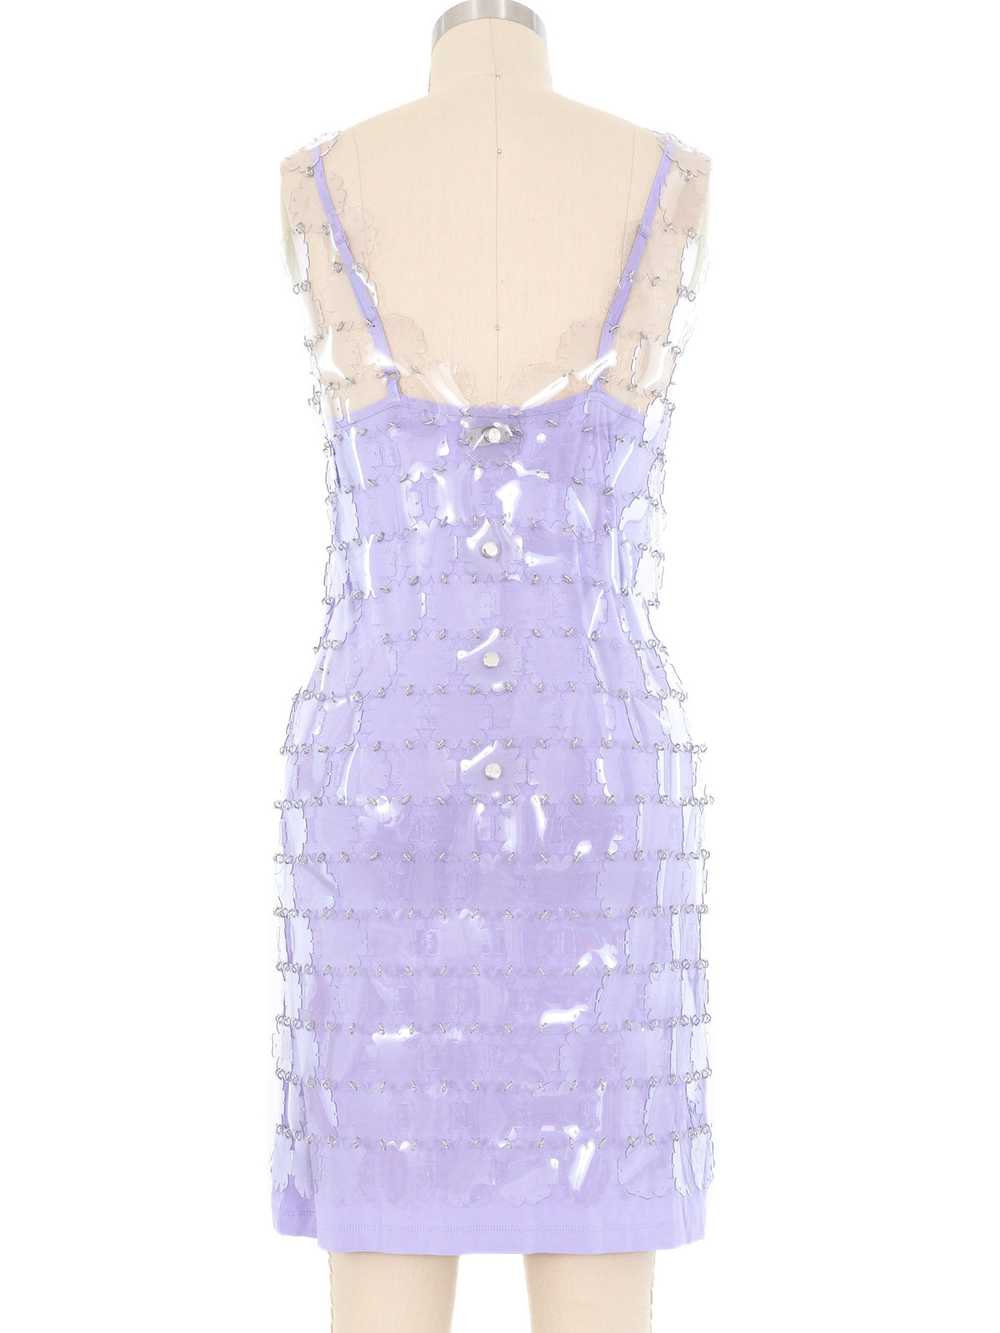 Paco Rabanne PVC Floral Mini Dress - image 4